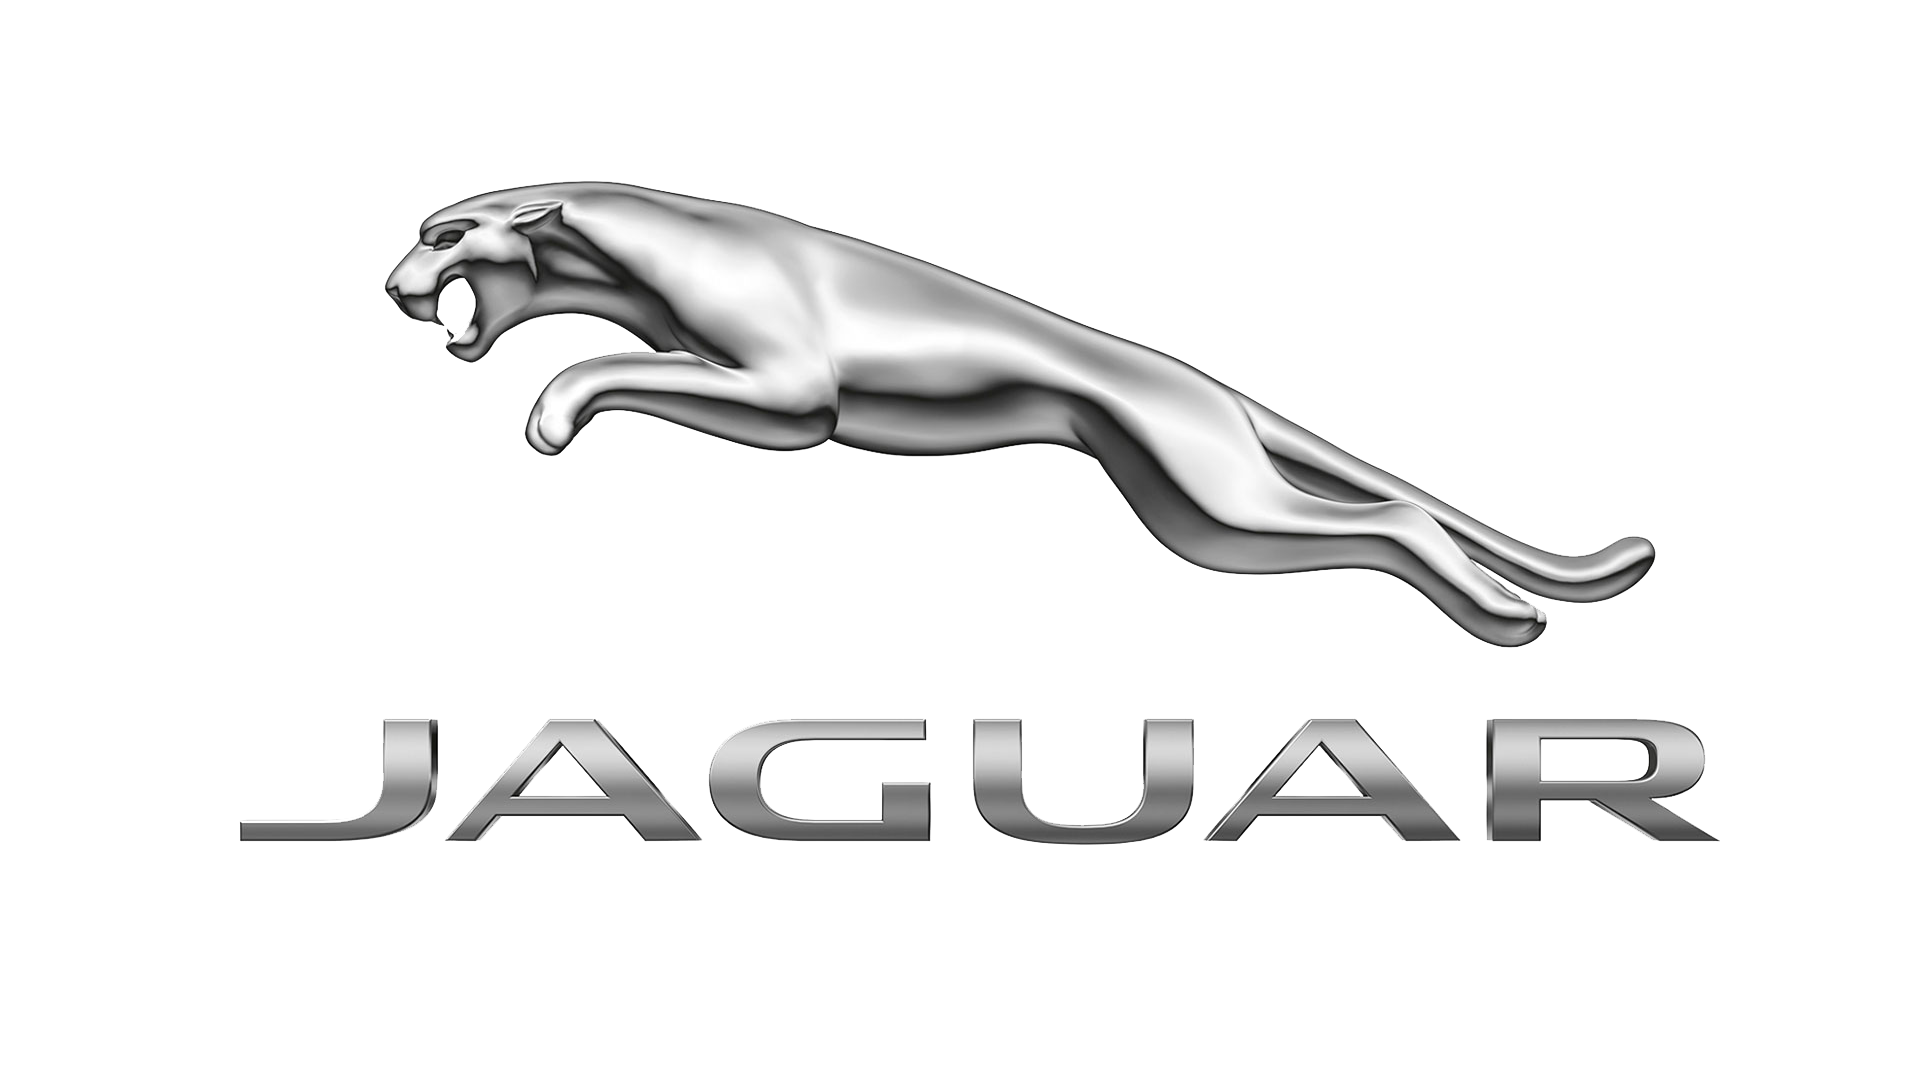 https://teamfixedops.com/wp-content/uploads/2019/05/Jaguar-Logo.png